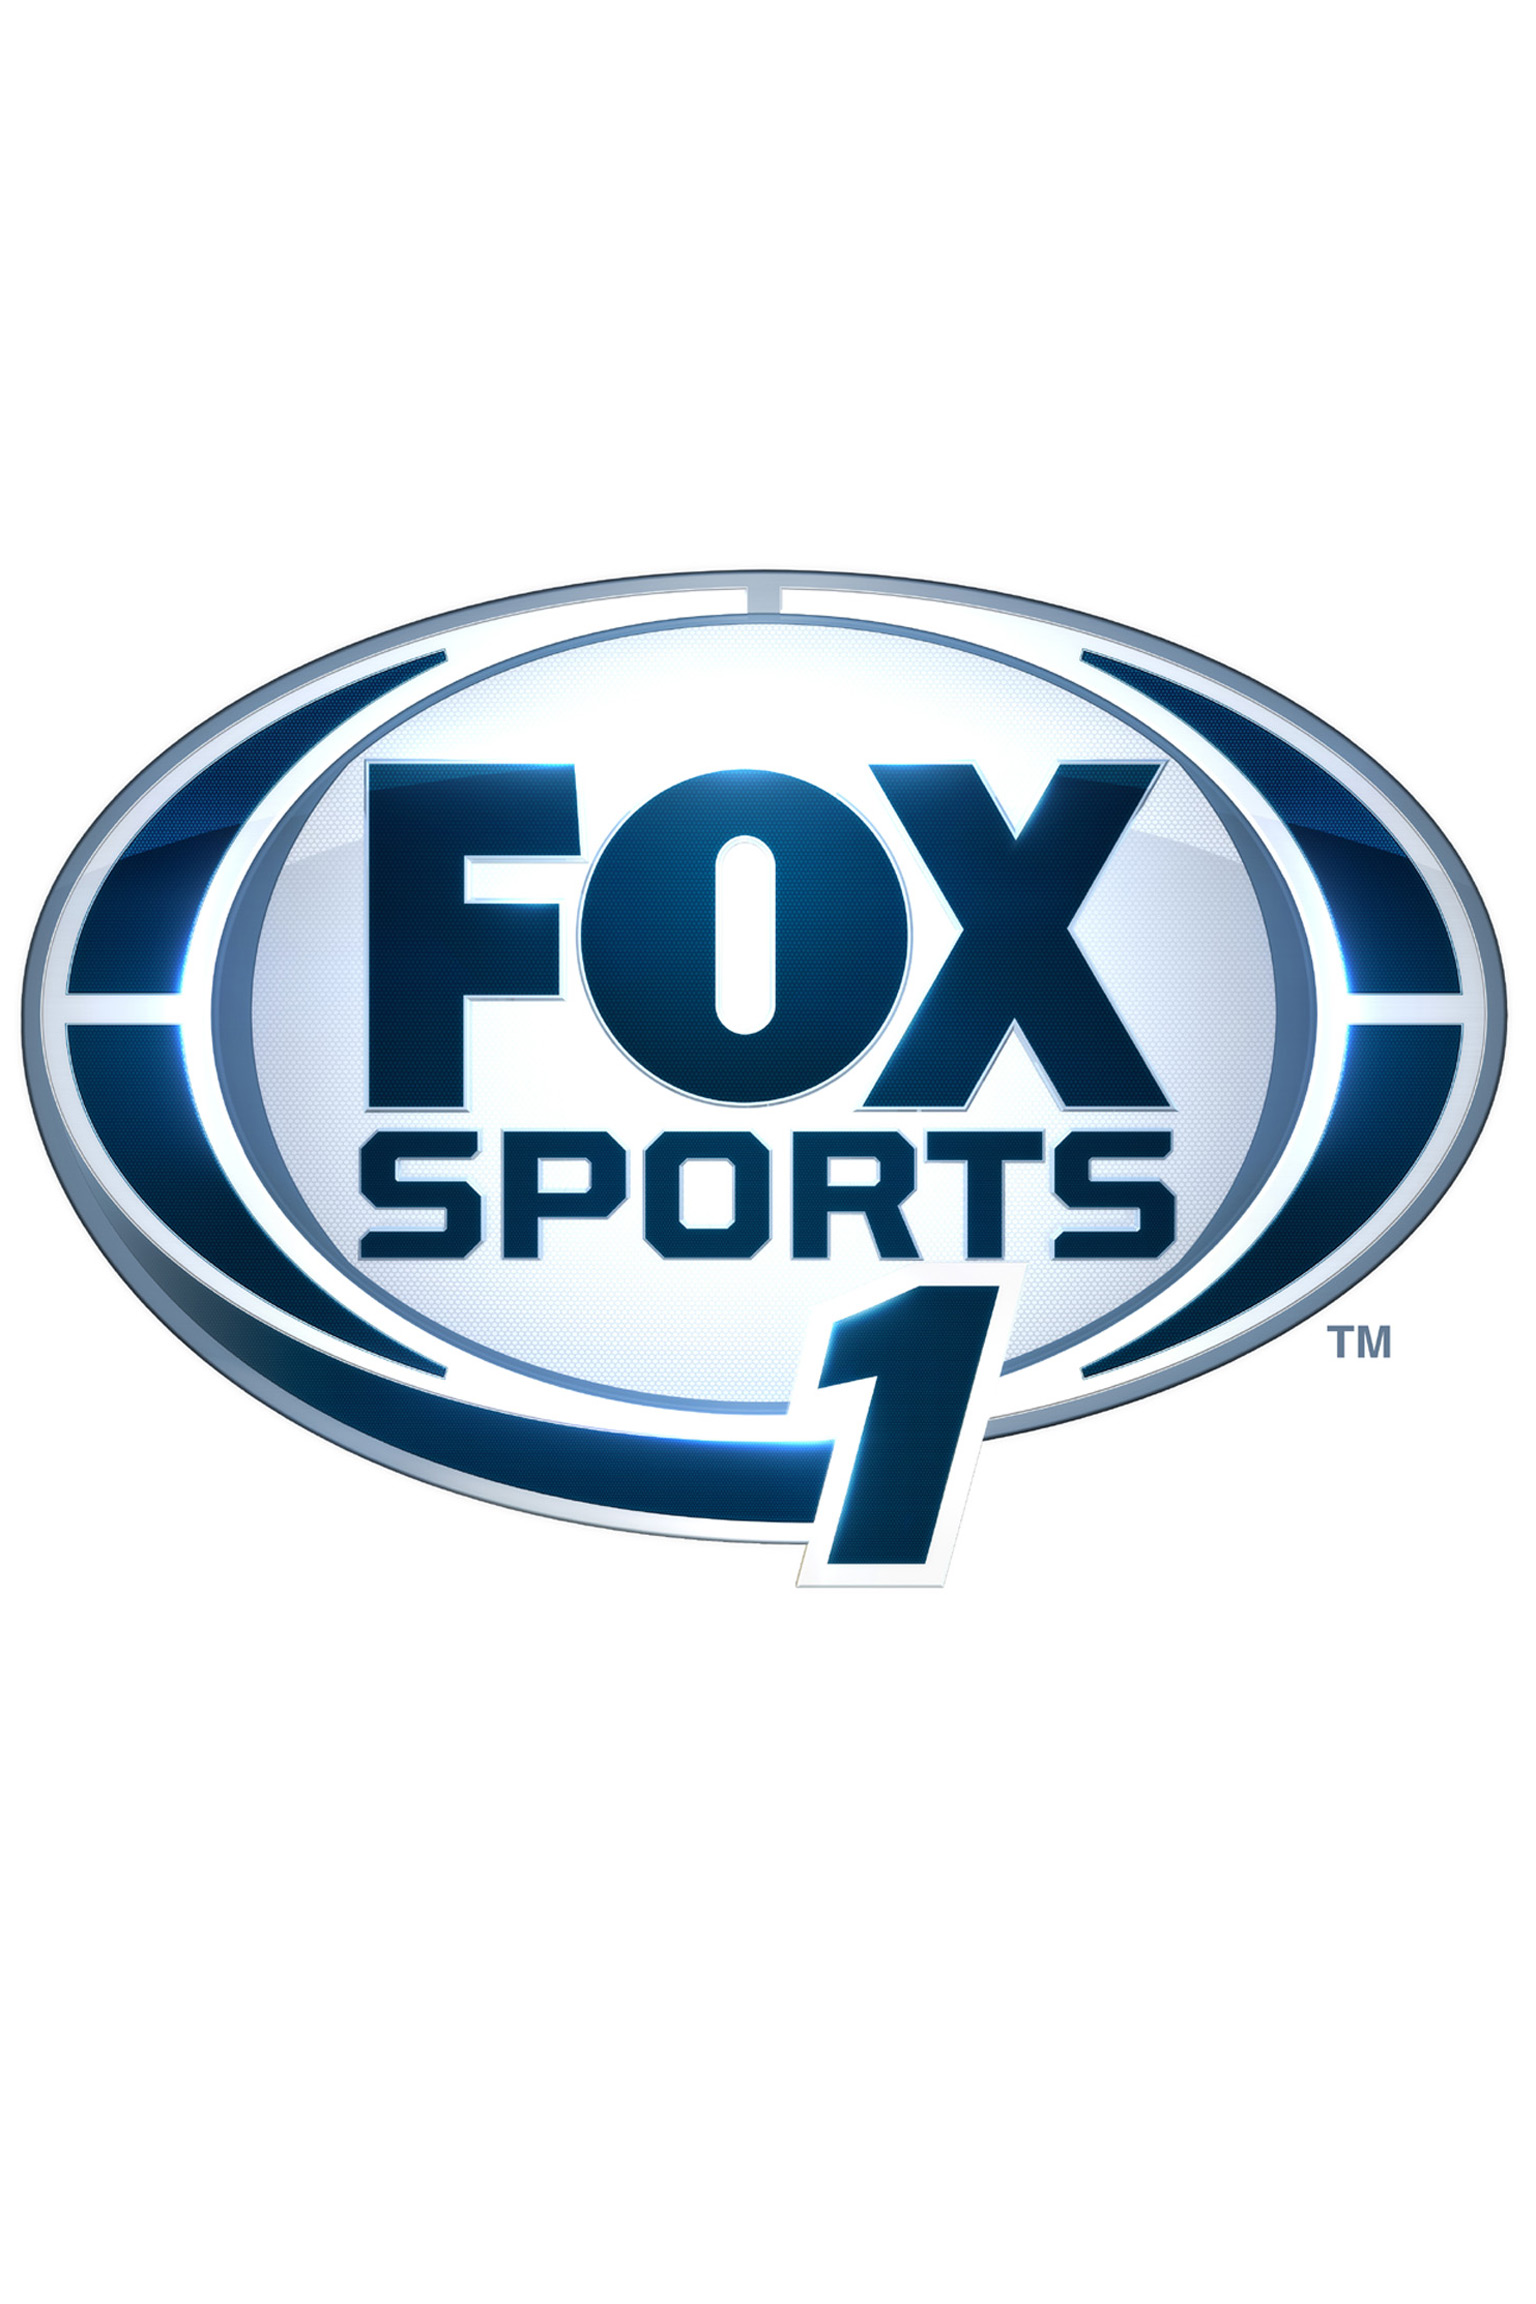 Fox Sports 1 on 1 - Full Cast & Crew - TV Guide